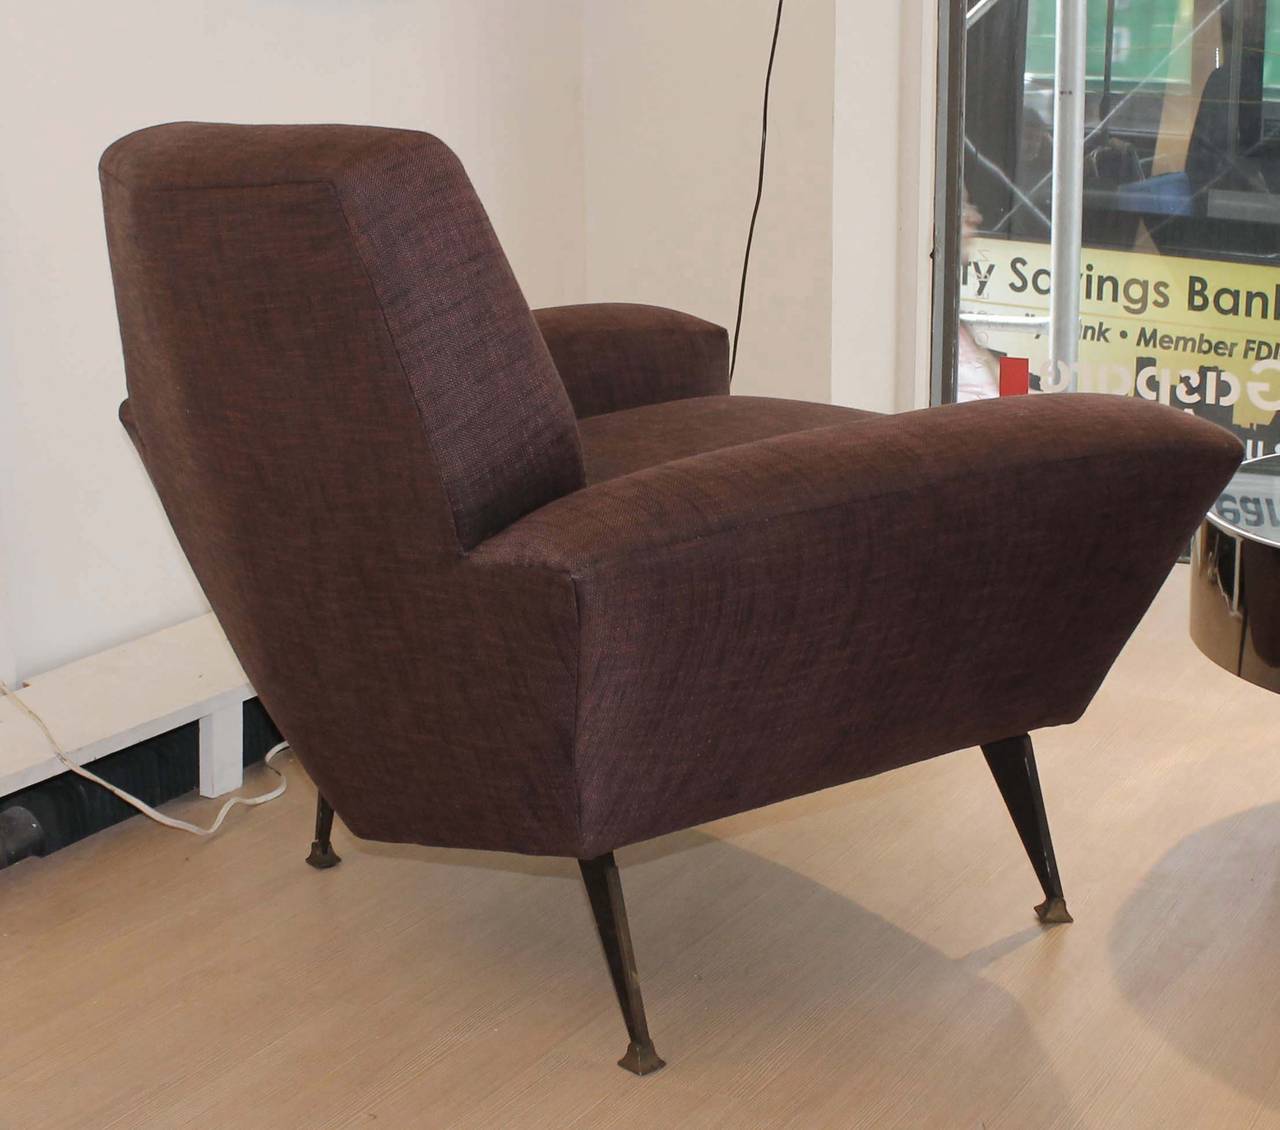 Mid-20th Century Italian Midcentury Lounge Chair Attributed to Radice